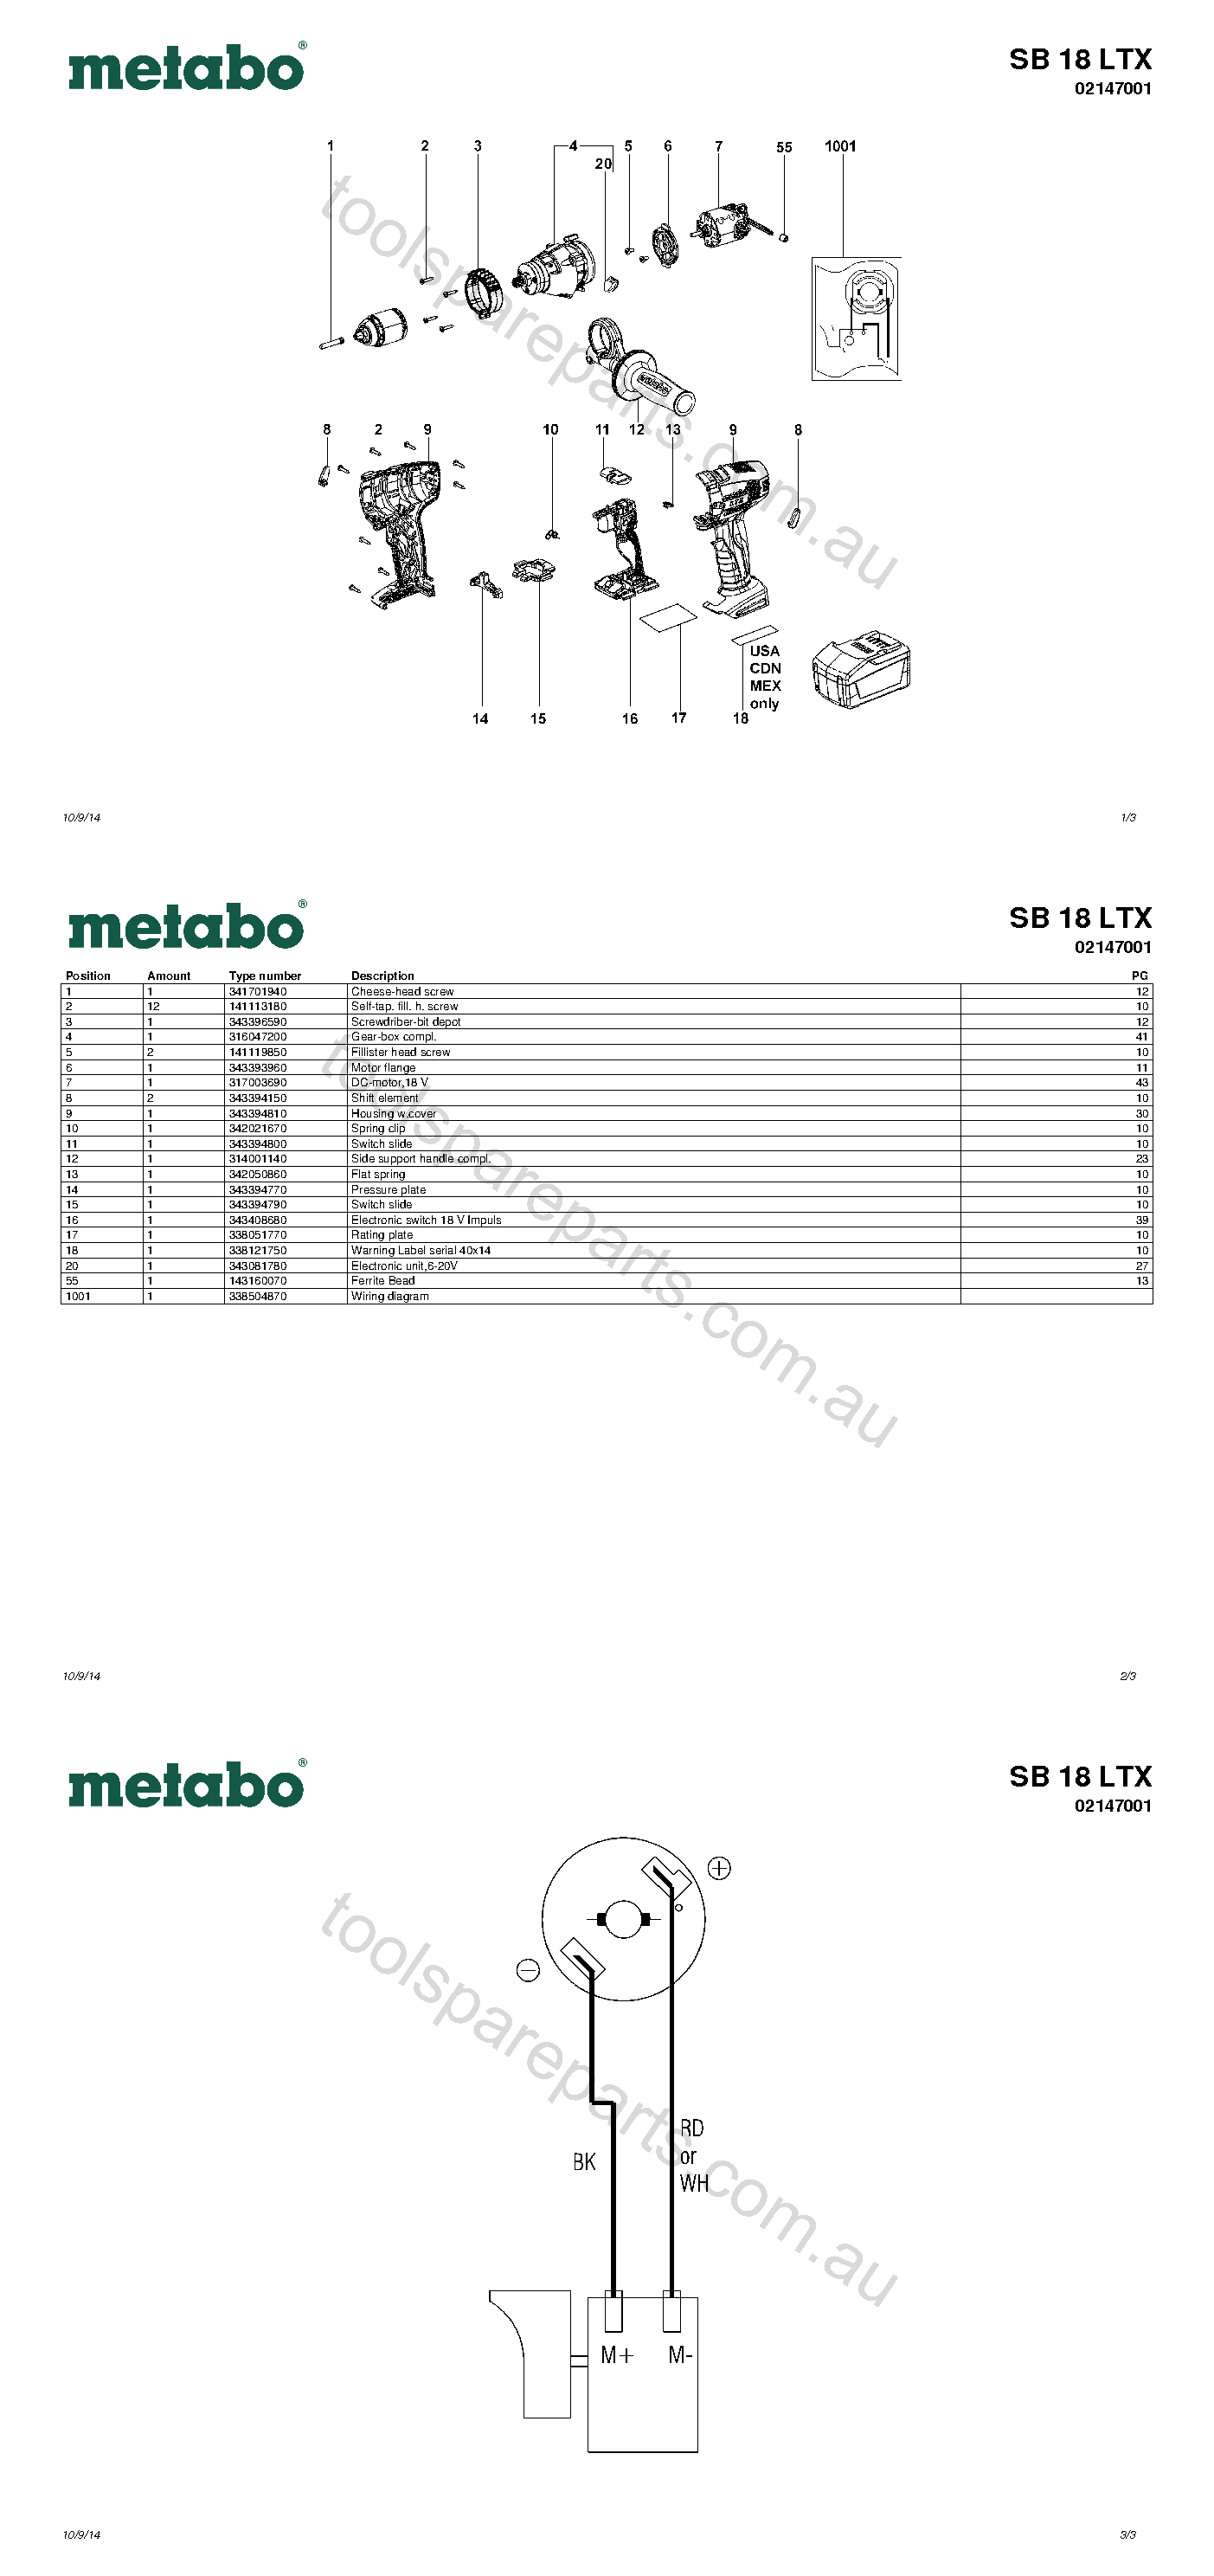 Metabo SB 18 LTX 02147001  Diagram 1